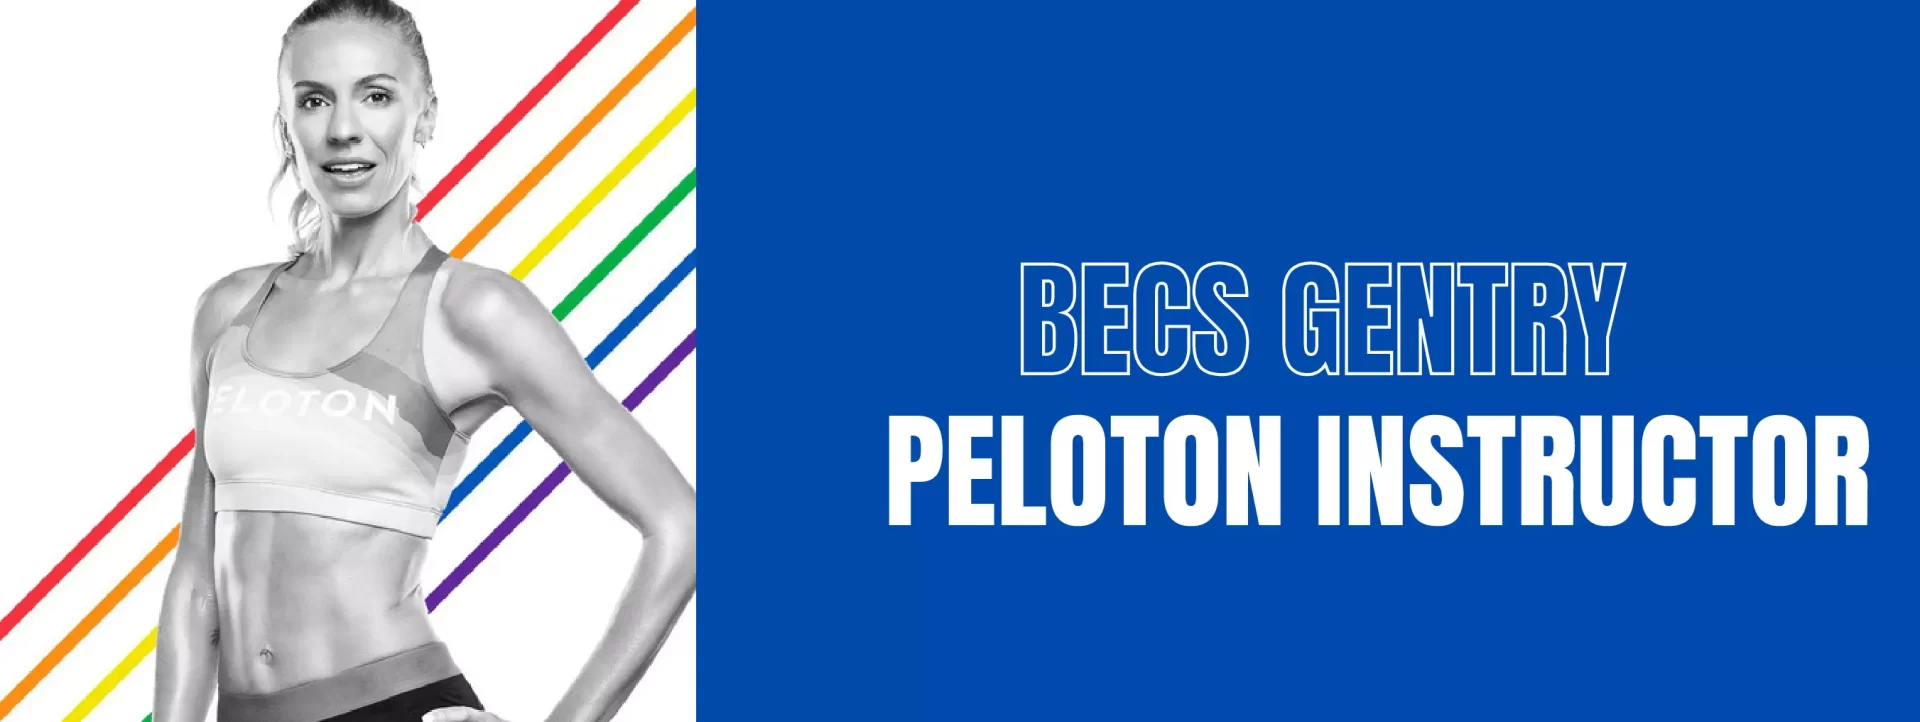 Becs Gentry Peloton Instructor